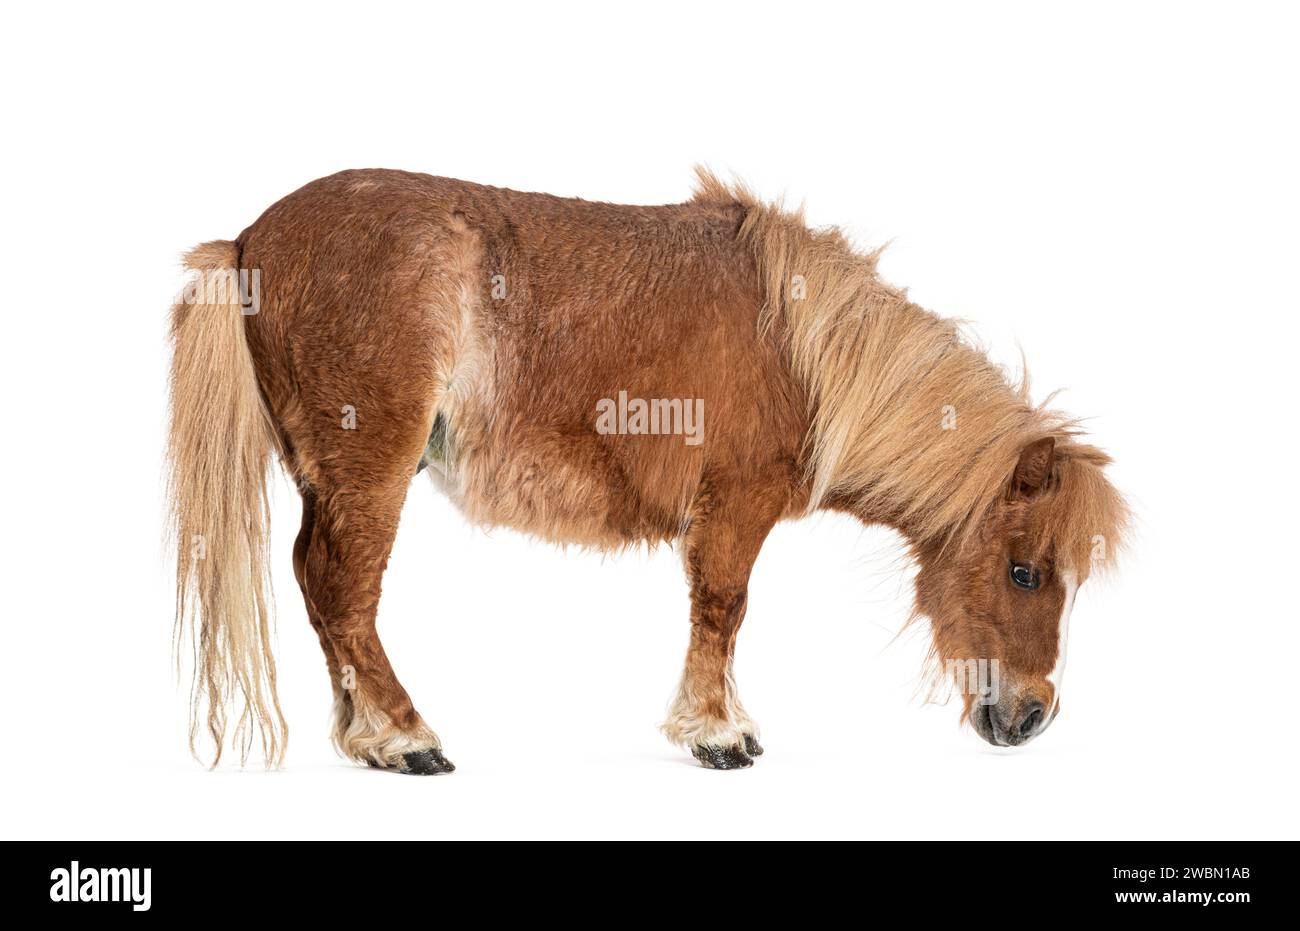 Falabella, Falabella Miniature Horse, Falabella Pony, Argentine Dwarf, Miniature Horse, Toy Horse Stock Photo